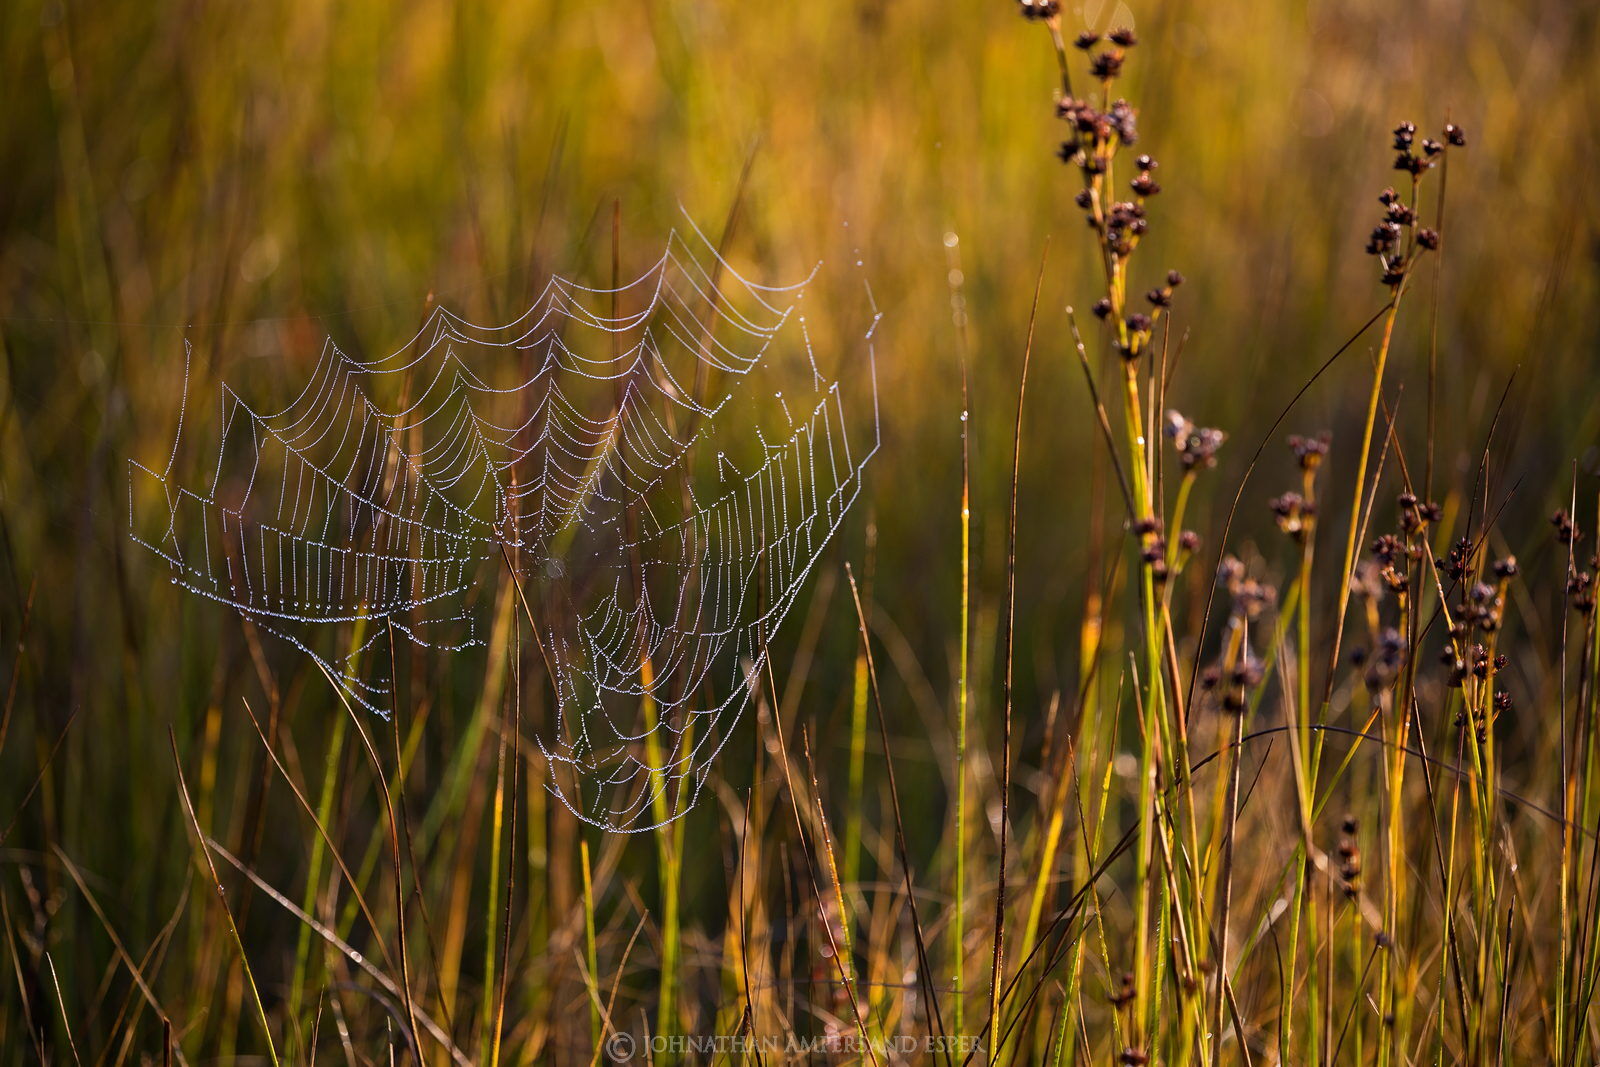 Adirondack Park, Adirondacks, Johnathan Esper, Wildernesscapes Photography,dew,backlit,Connery Pond,spider web,